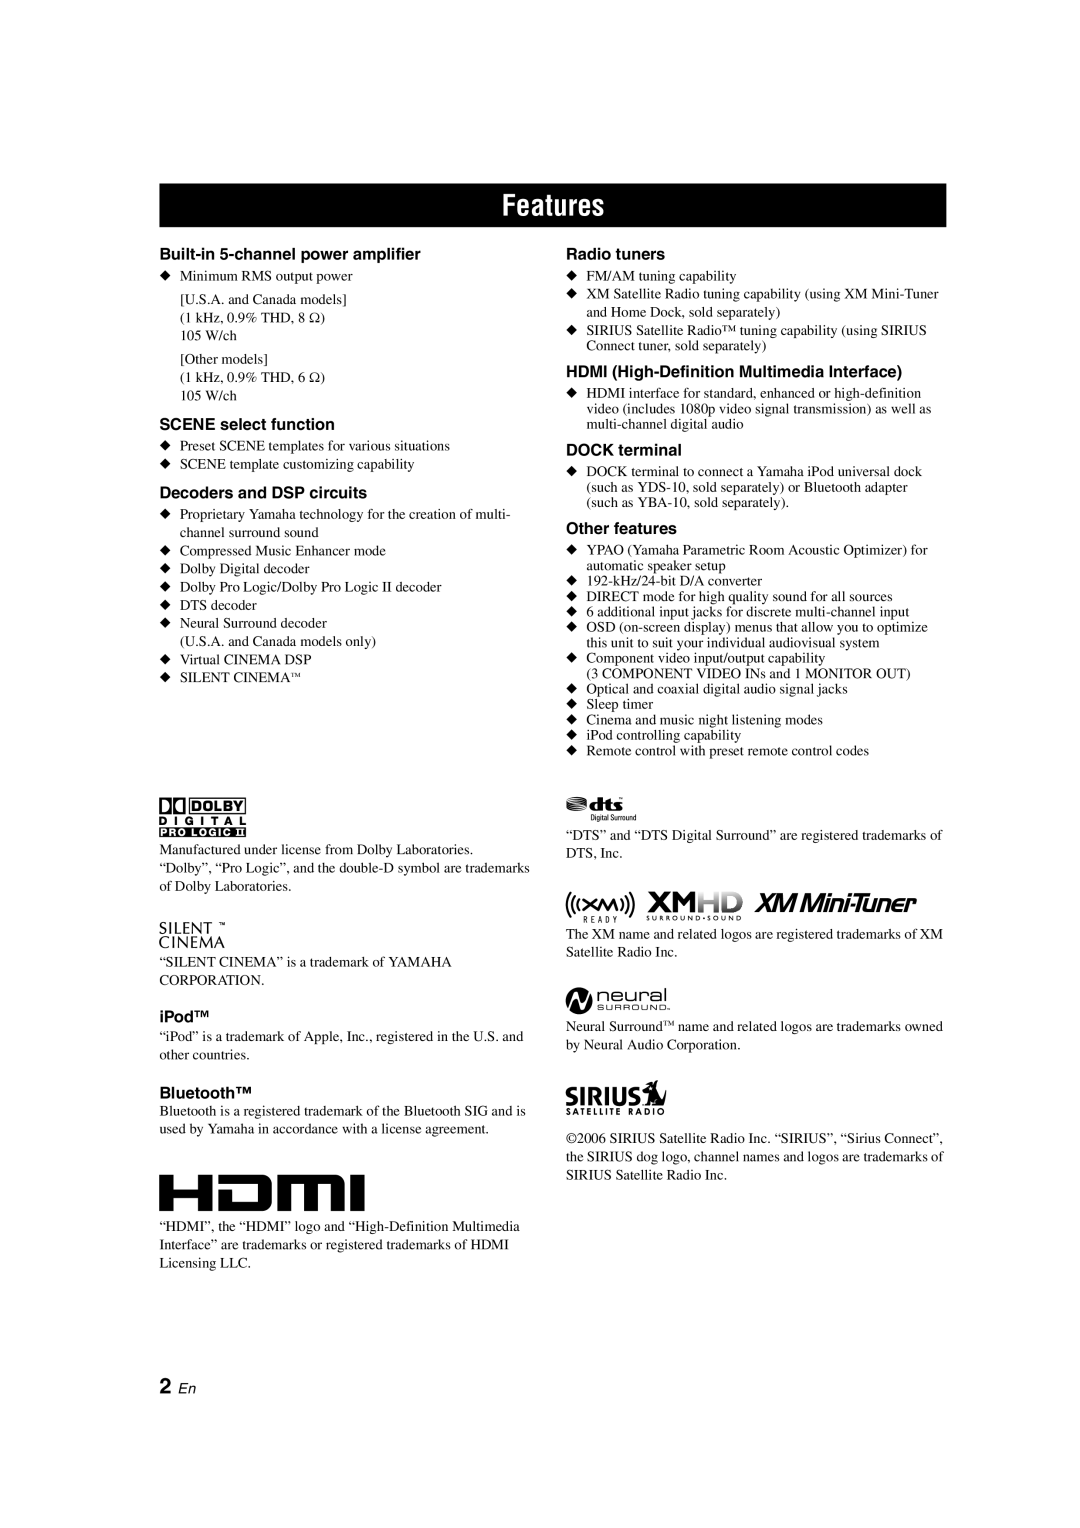 Yamaha HTR-6140 owner manual Features, 2 En 